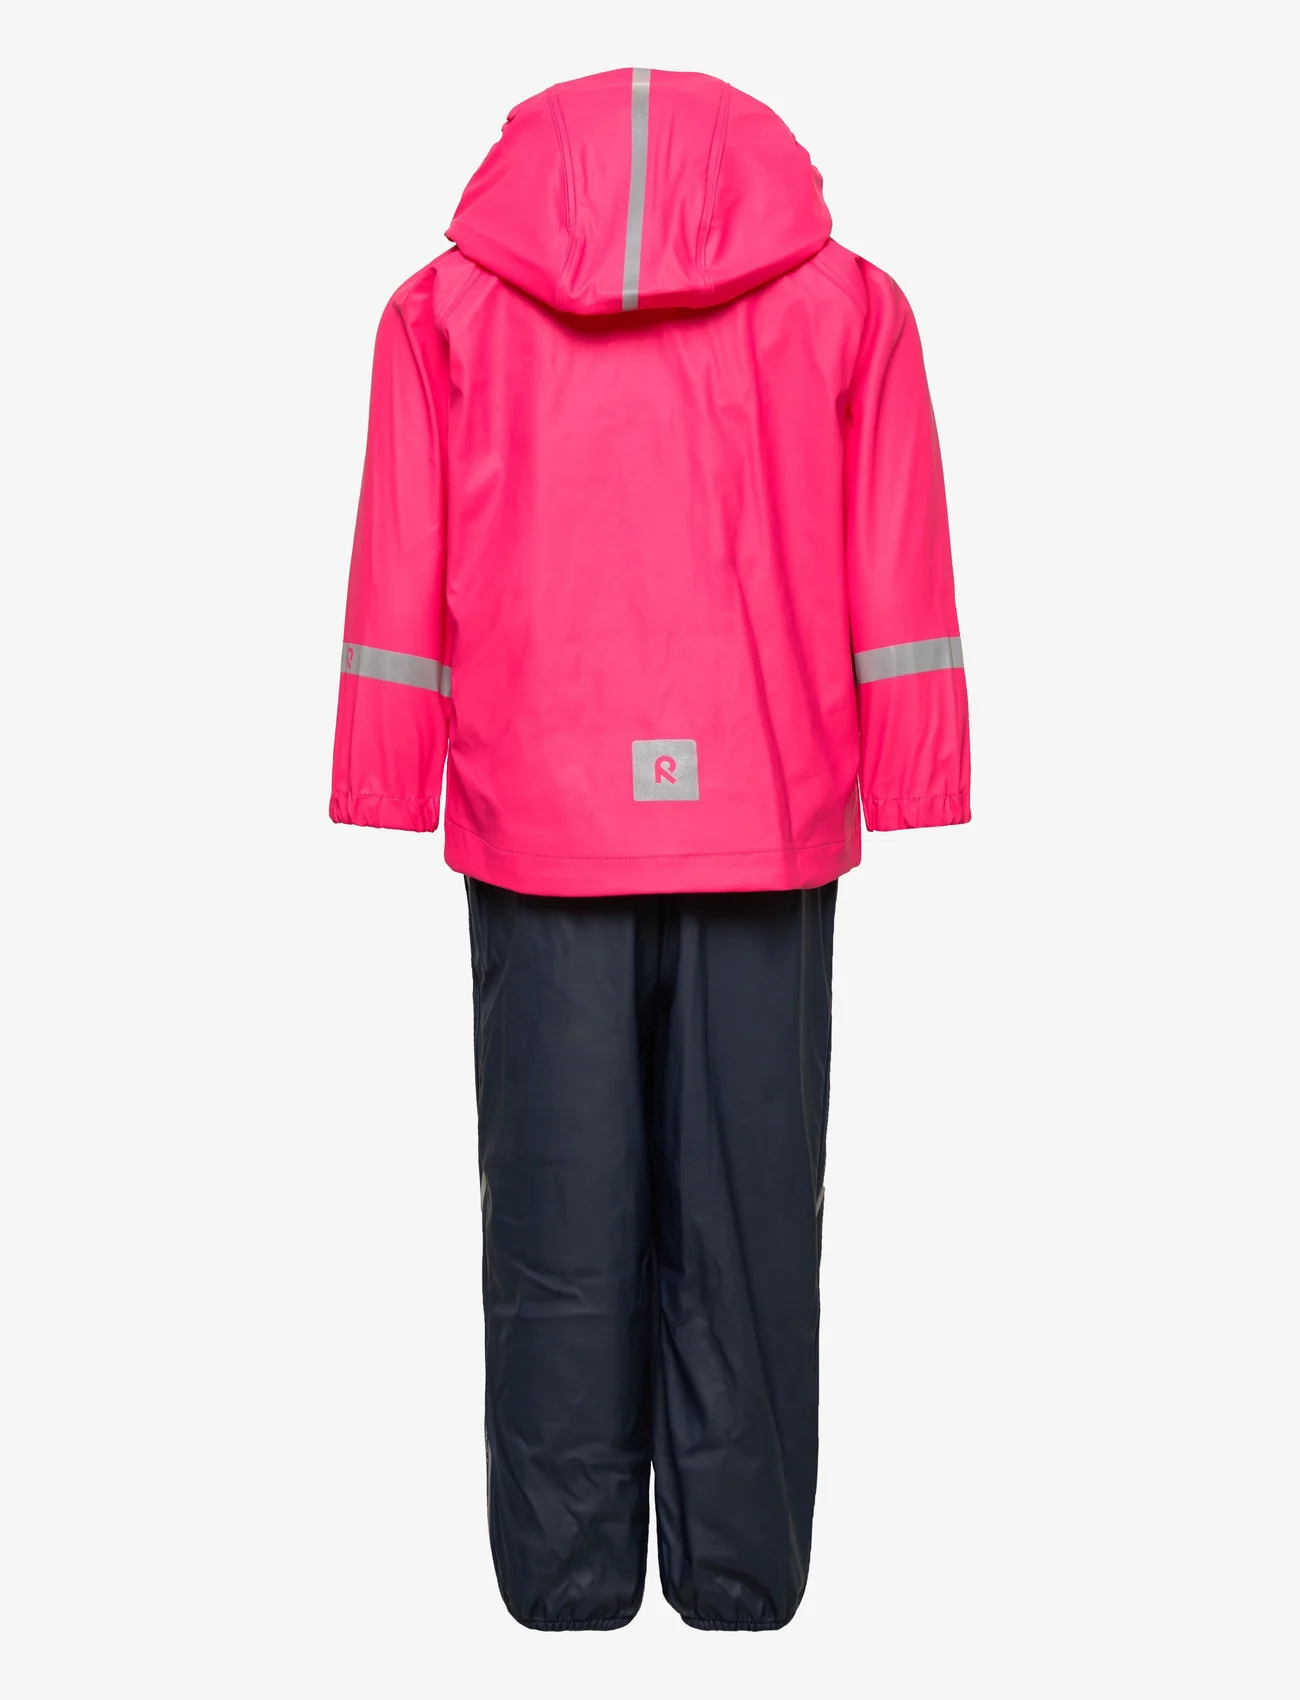 Reima - Rain outfit, Tihku - regnsett - candy pink - 1